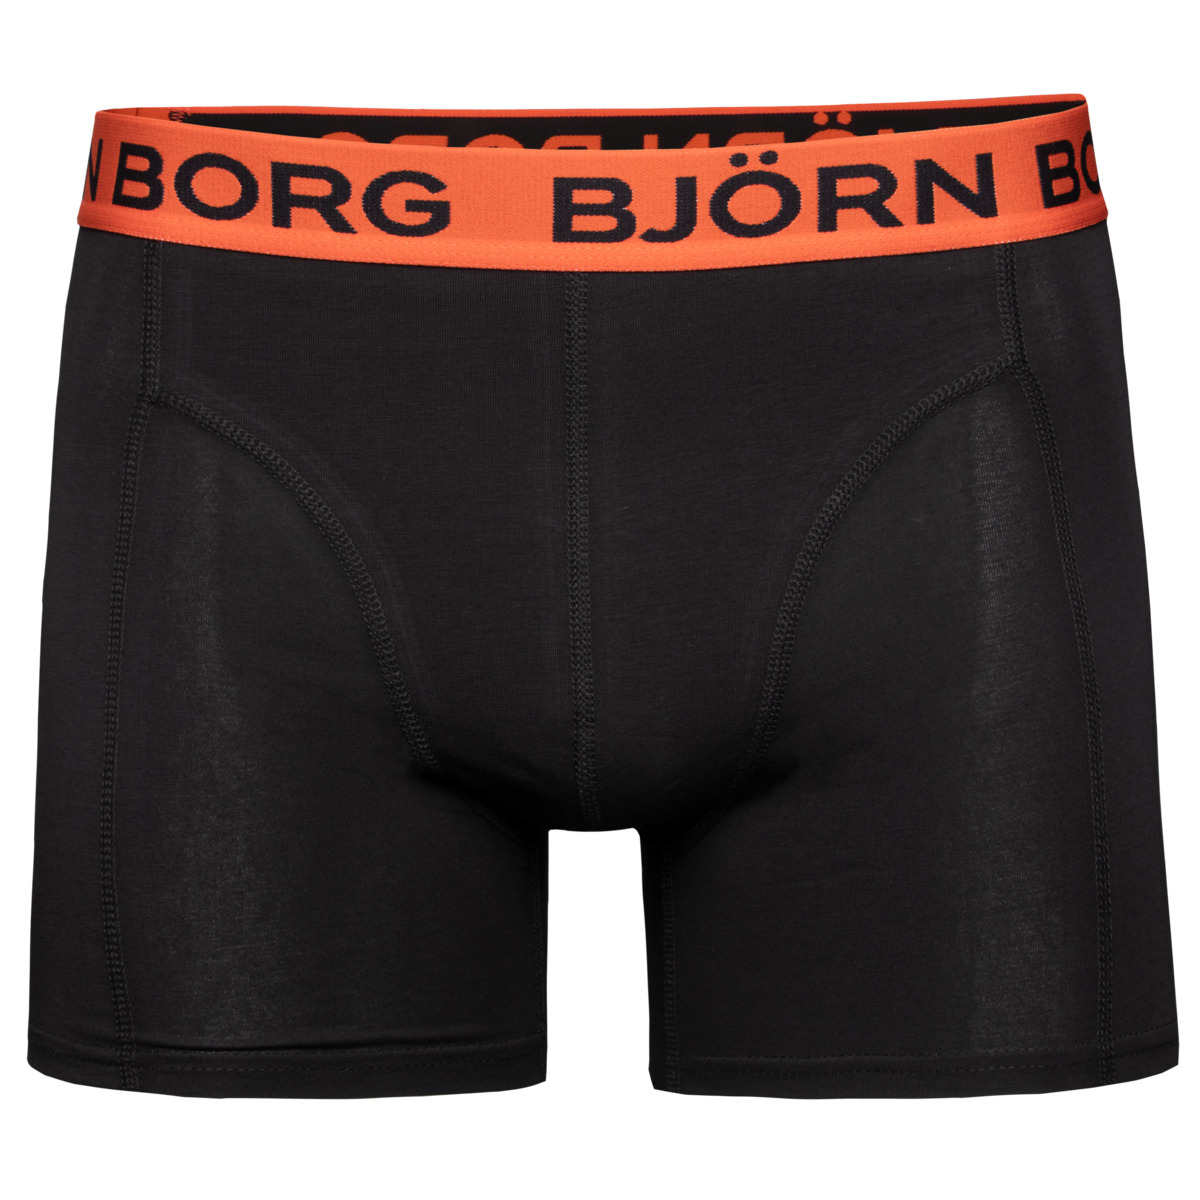 Björn Borg Cotton Stretch Boxer 5er Pack Boxershorts schwarz